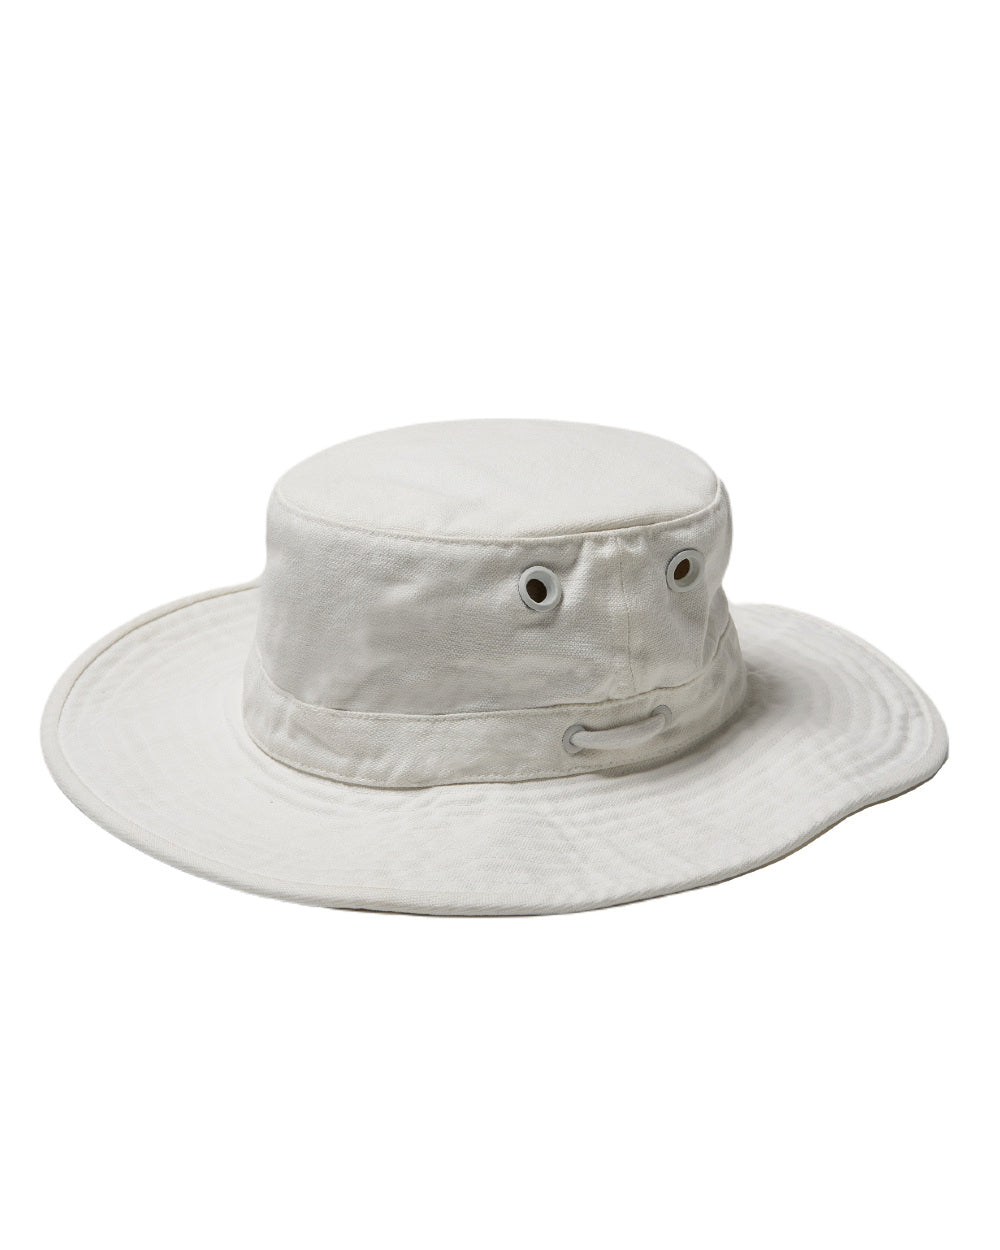 White Coloured Tilley Hat Wide Brim Wanderer On A White Background 